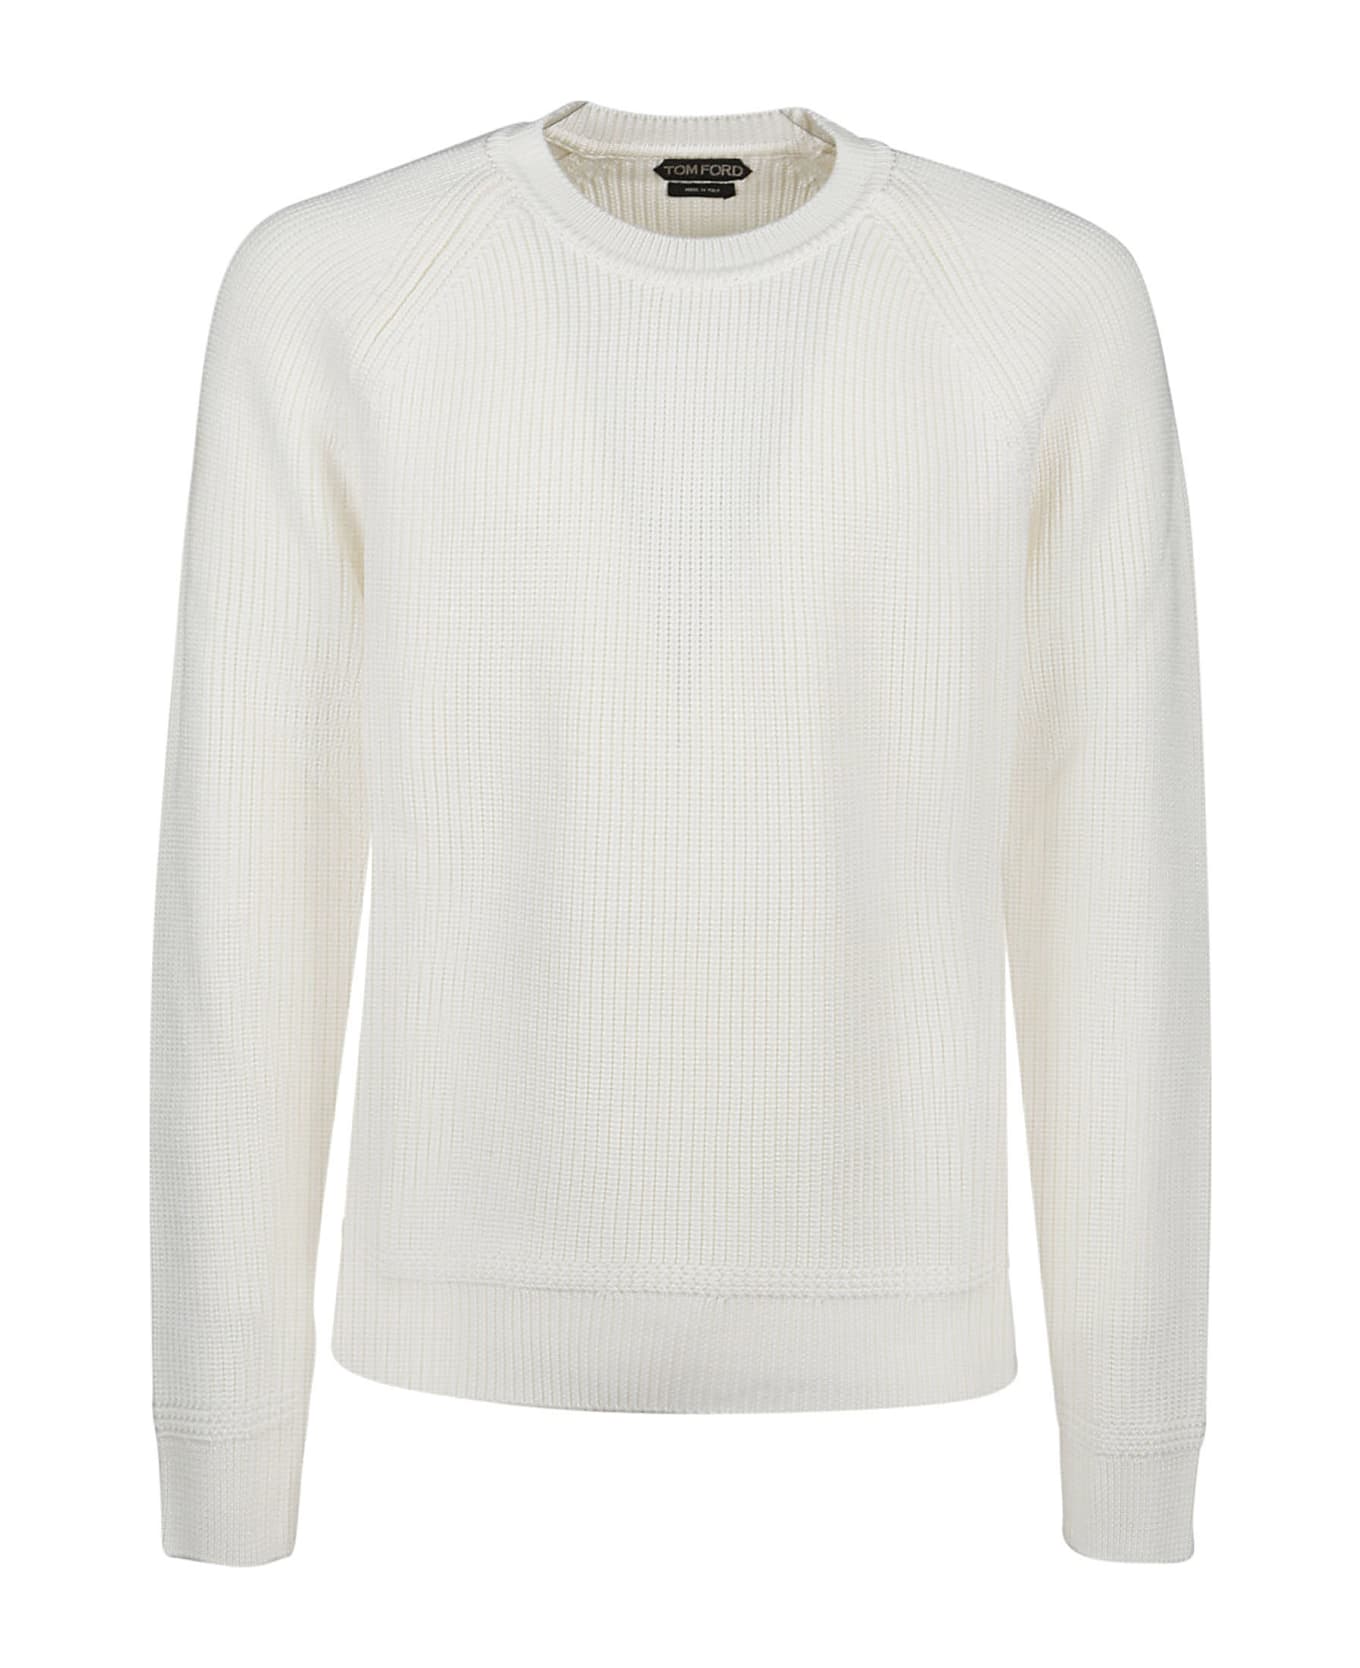 Tom Ford Silk Merino Raglan Sweater - White